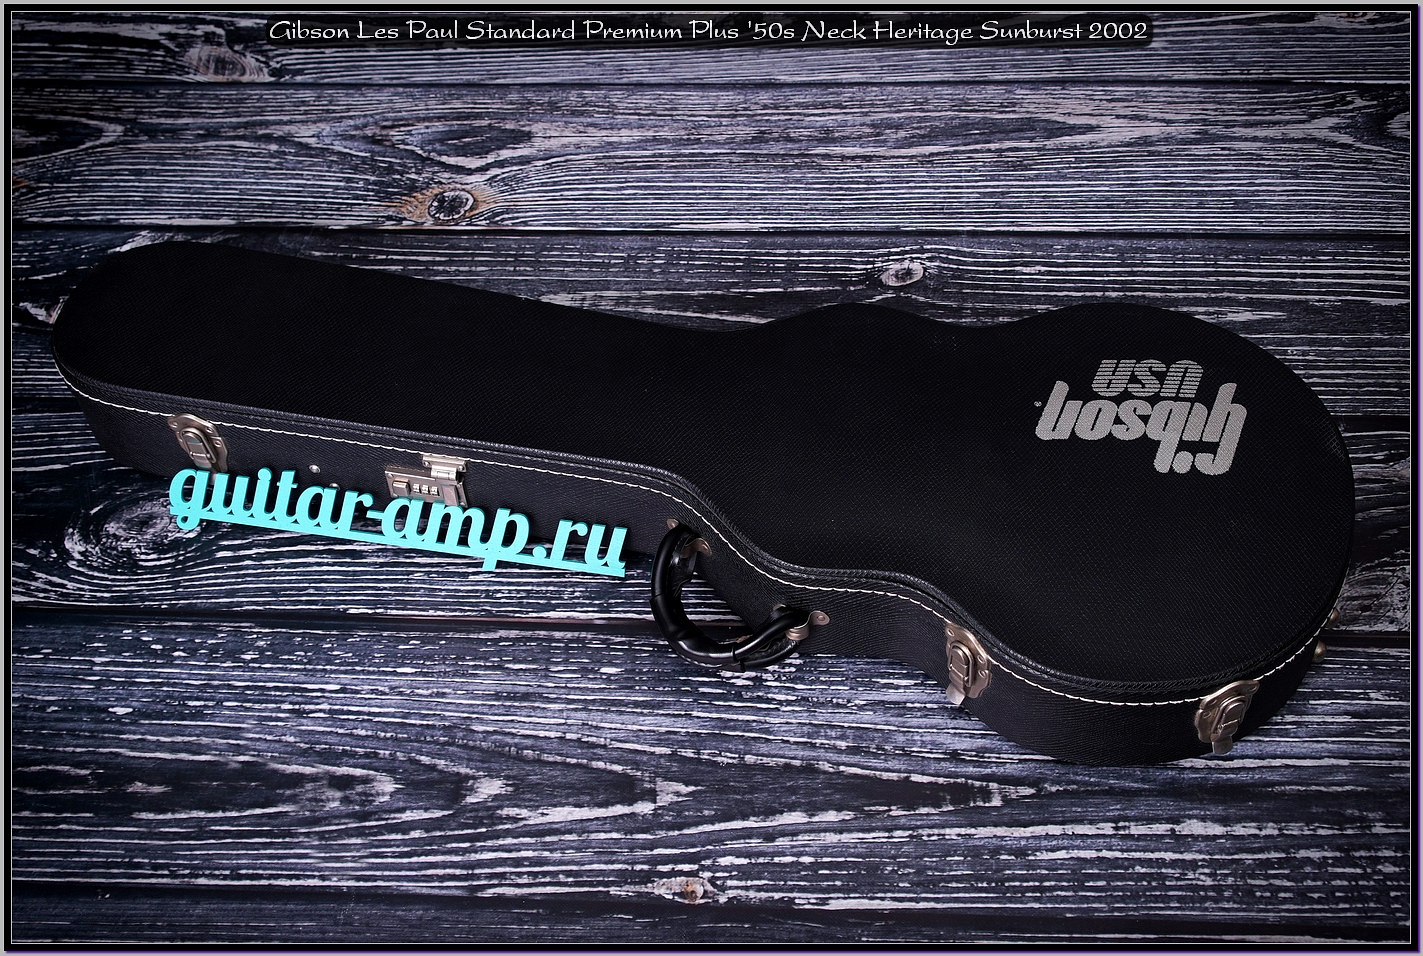 Gibson Les Paul Standard Premium Plus '50s Neck Heritage Cherry Sunburst 2002 01_x1400.jpg